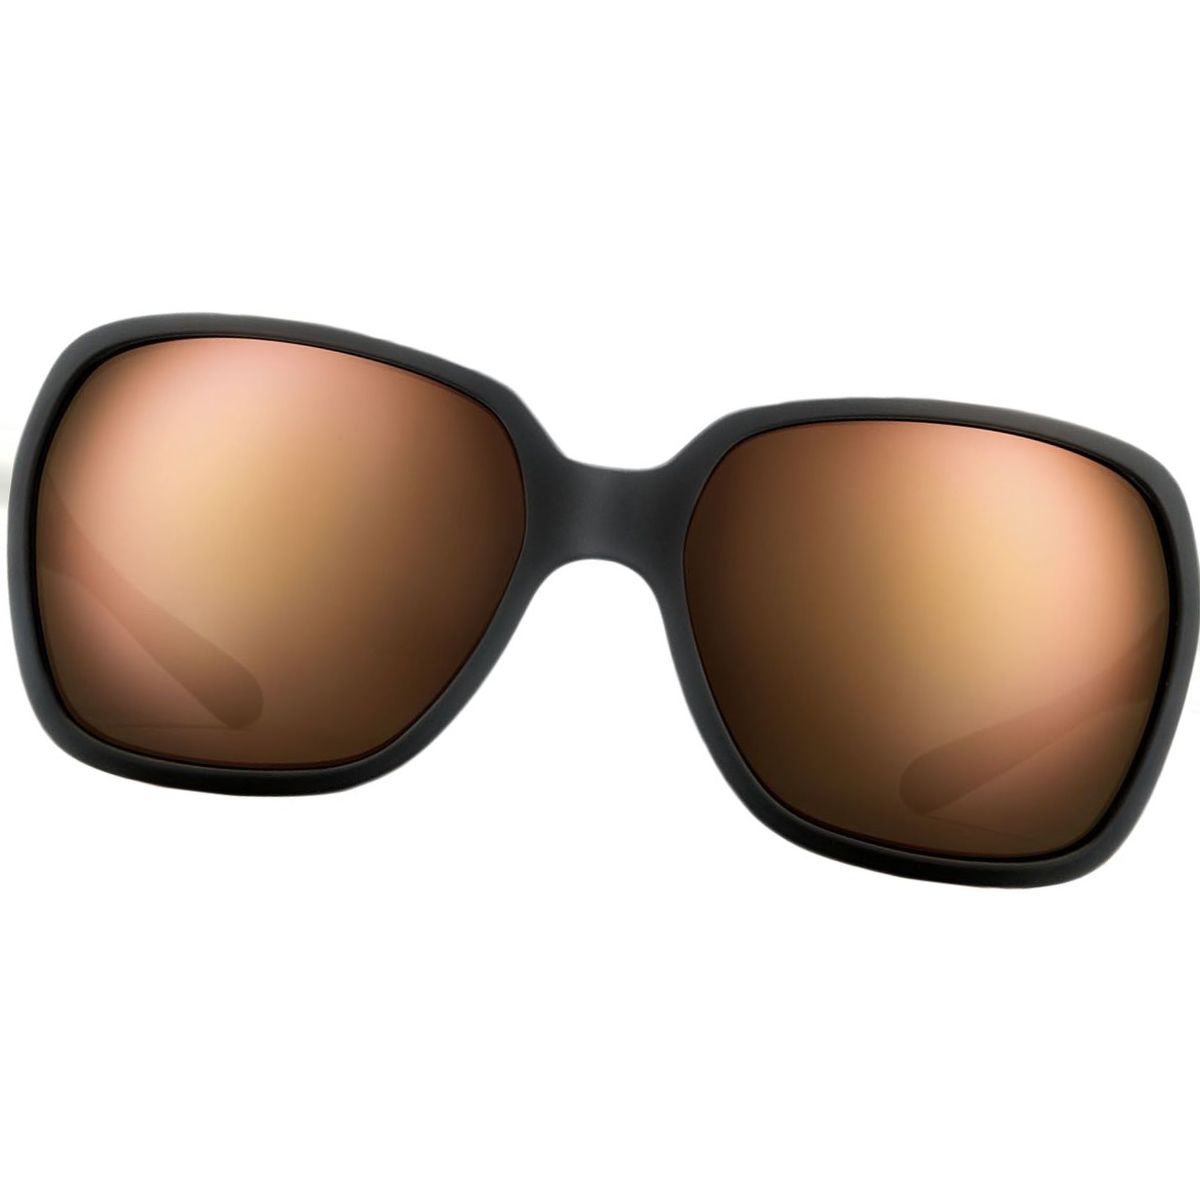 Roka Monaco Sunglasses - Women's